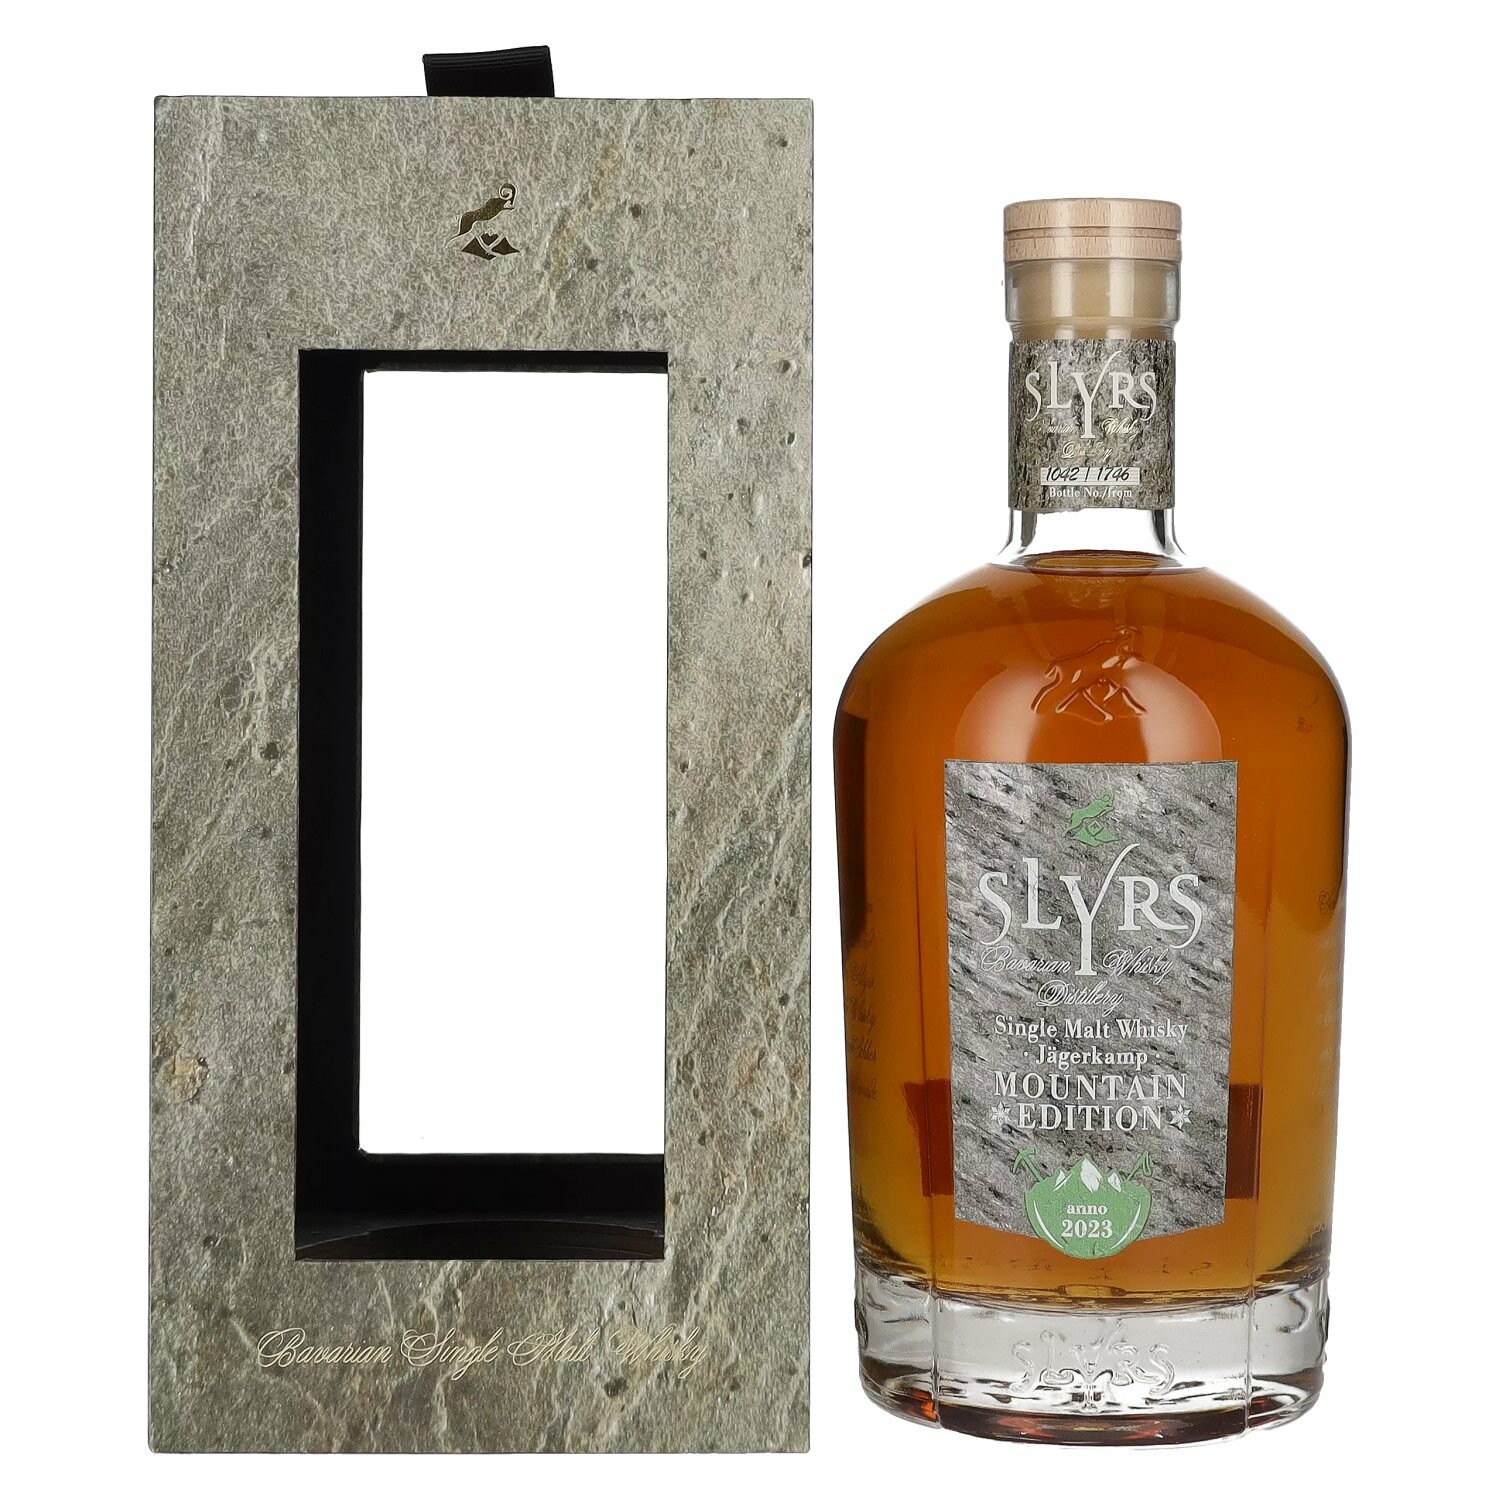 Slyrs Single Malt Whisky MOUNTAIN EDITION Jägerkamp 2023 50,4% Vol. 0,7l in Giftbox